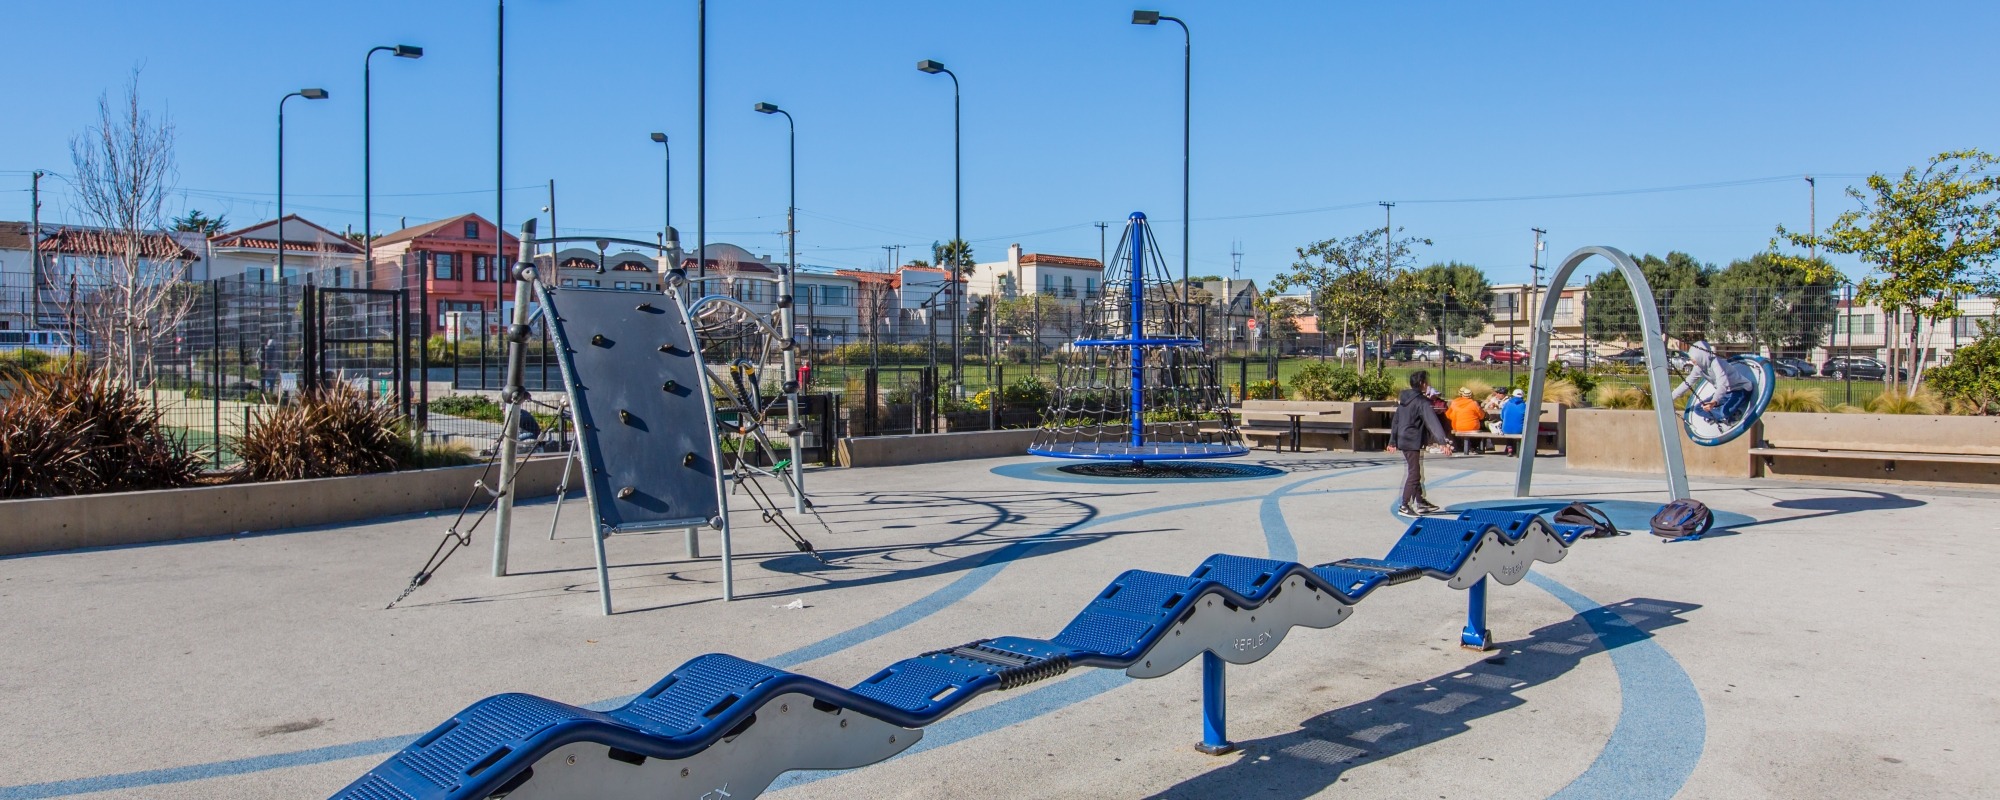 Palega Playground and Recreation Center